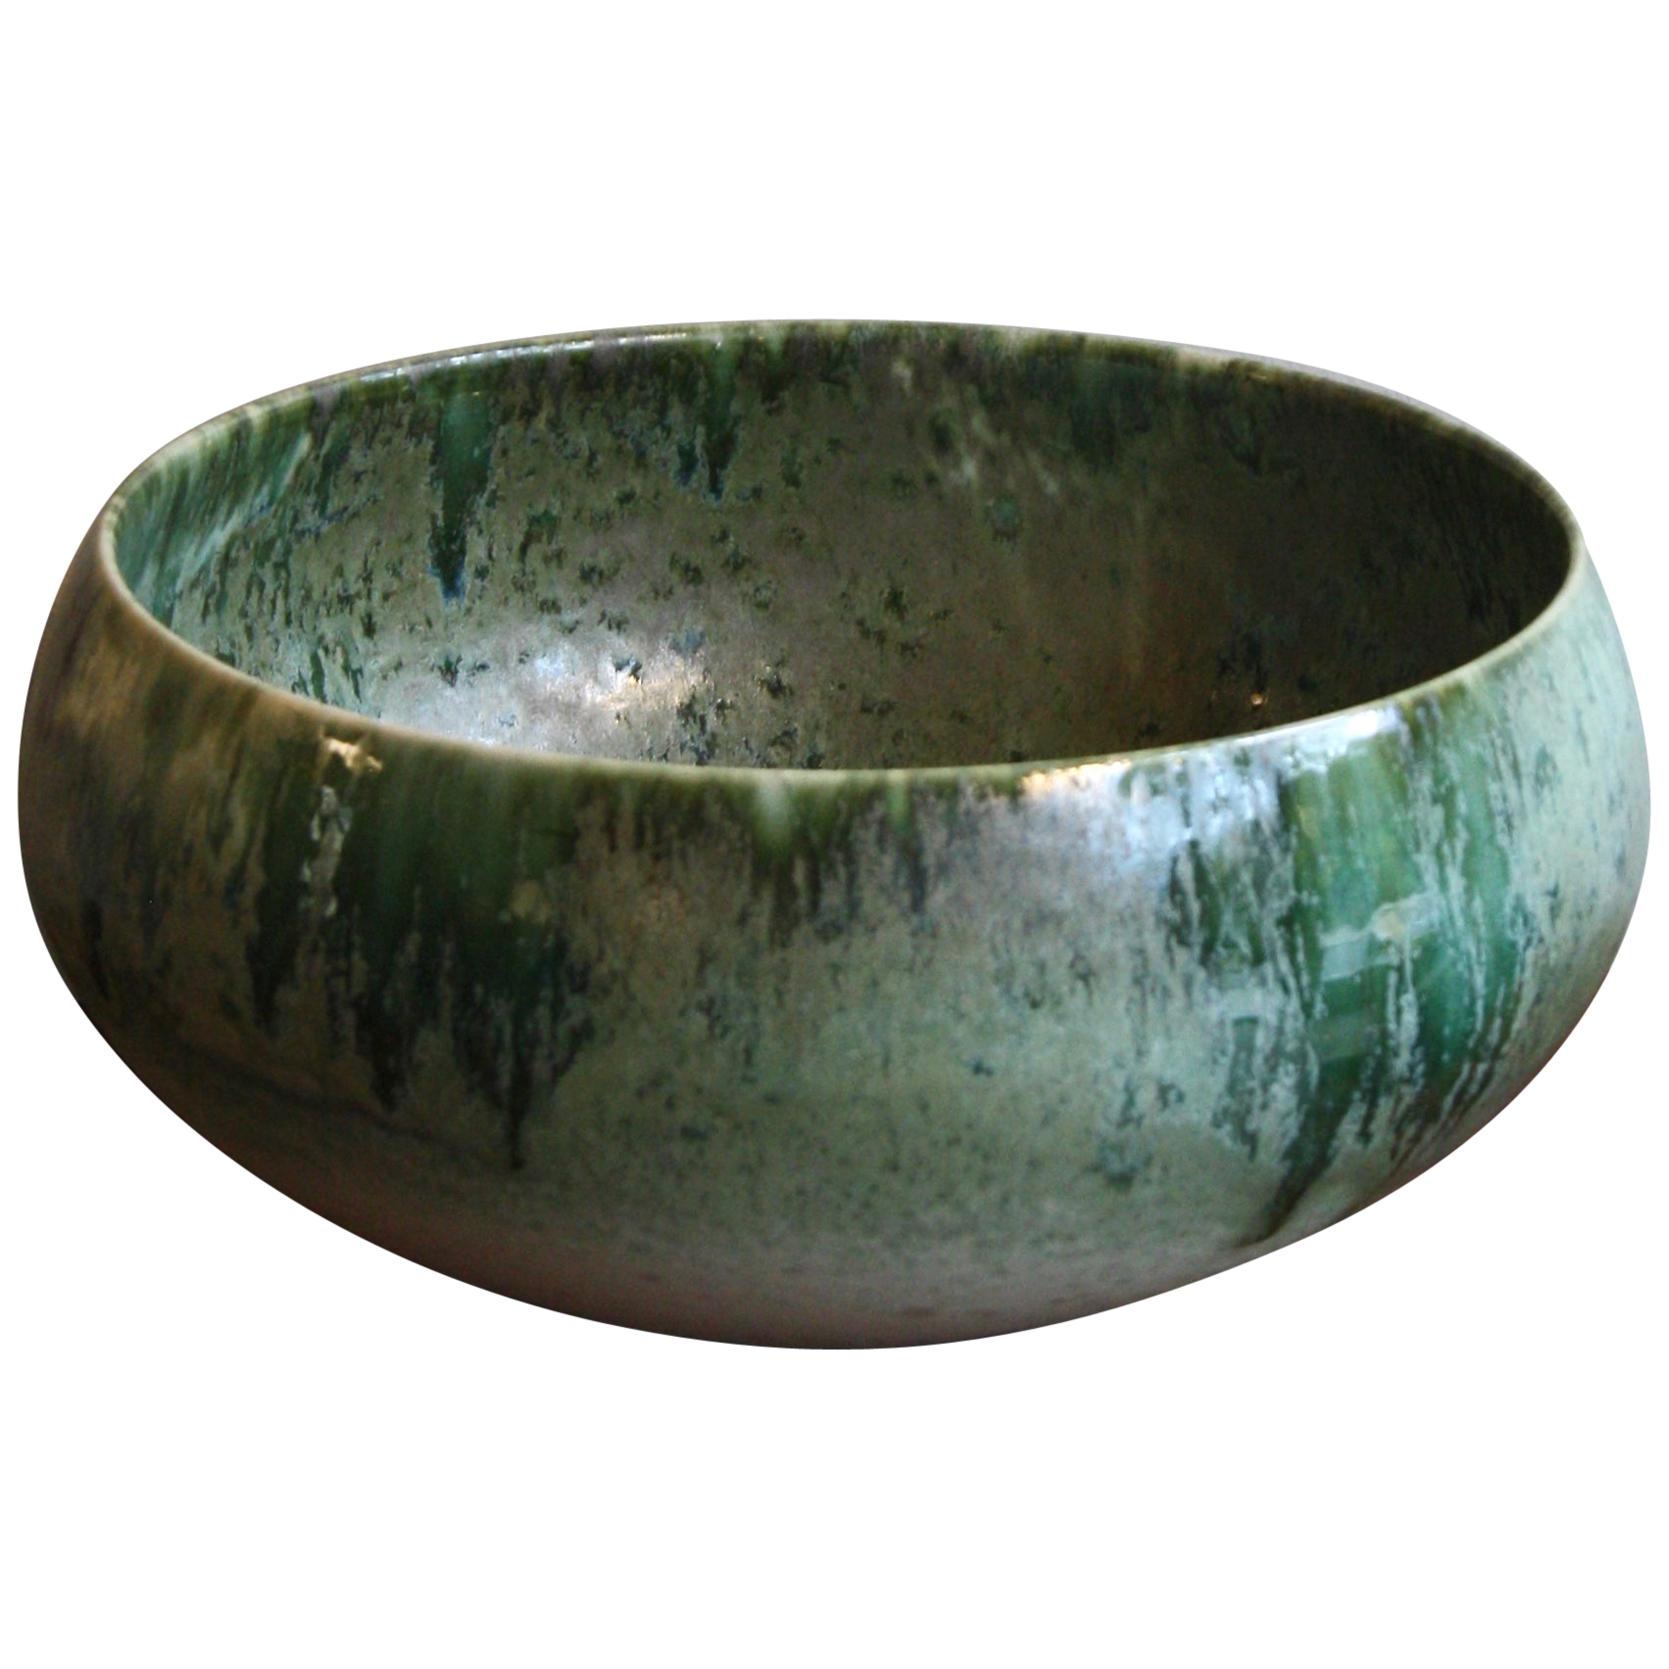 Aage and Kasper Würtz Large Cauldron Shaped Bowl White and Green Glaze